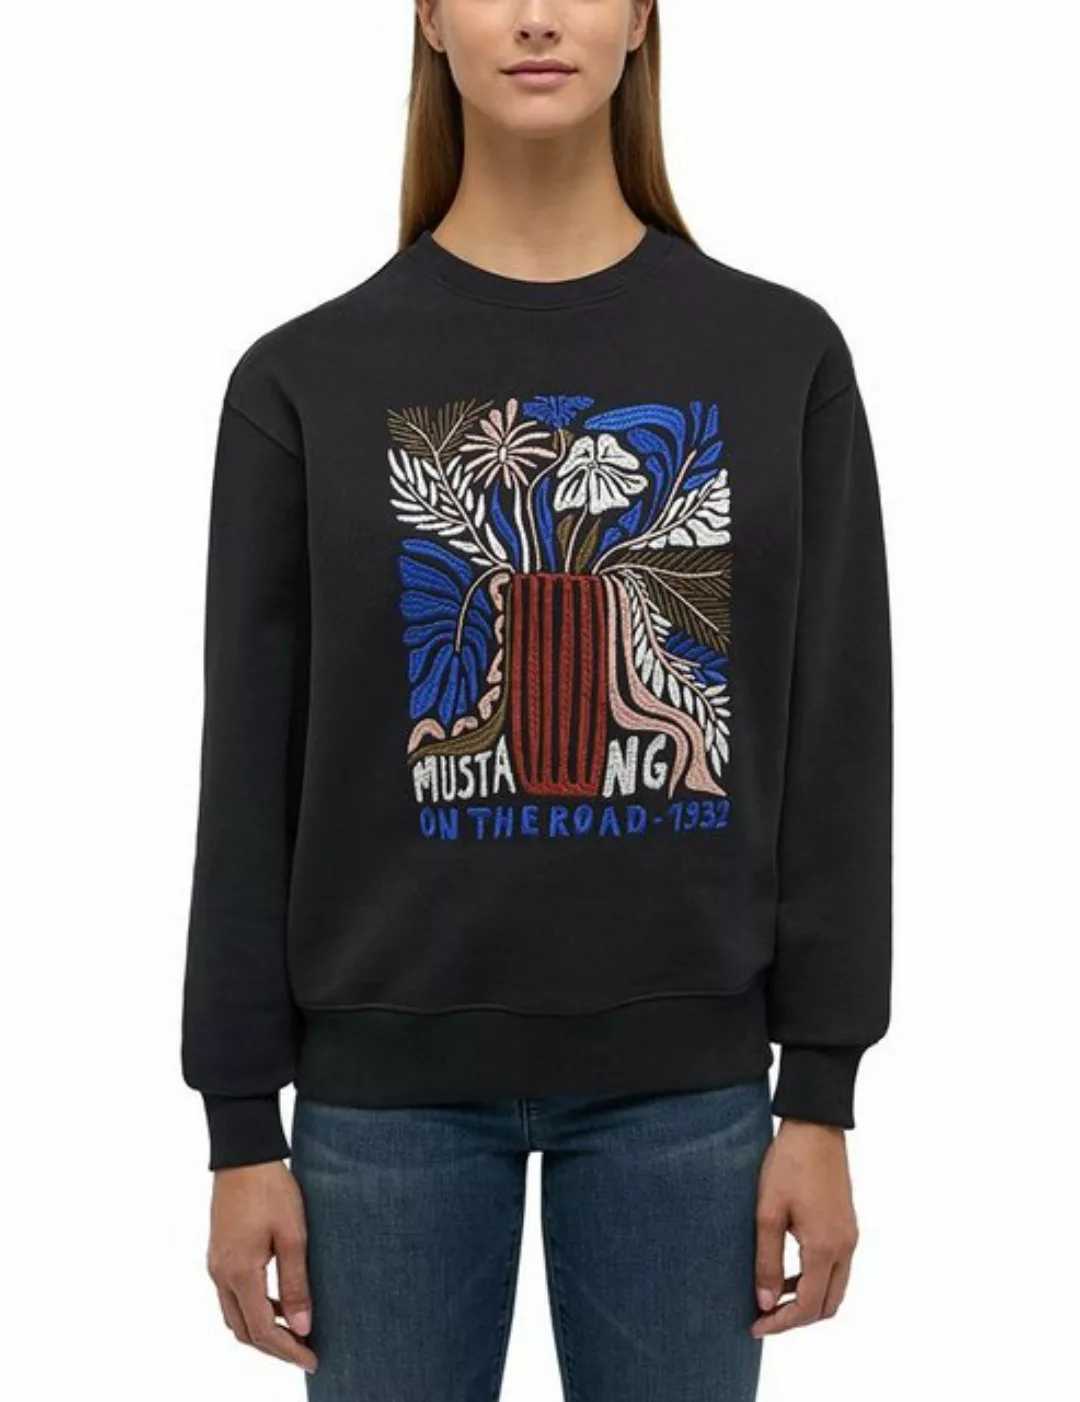 MUSTANG Sweatshirt Sweatshirt günstig online kaufen